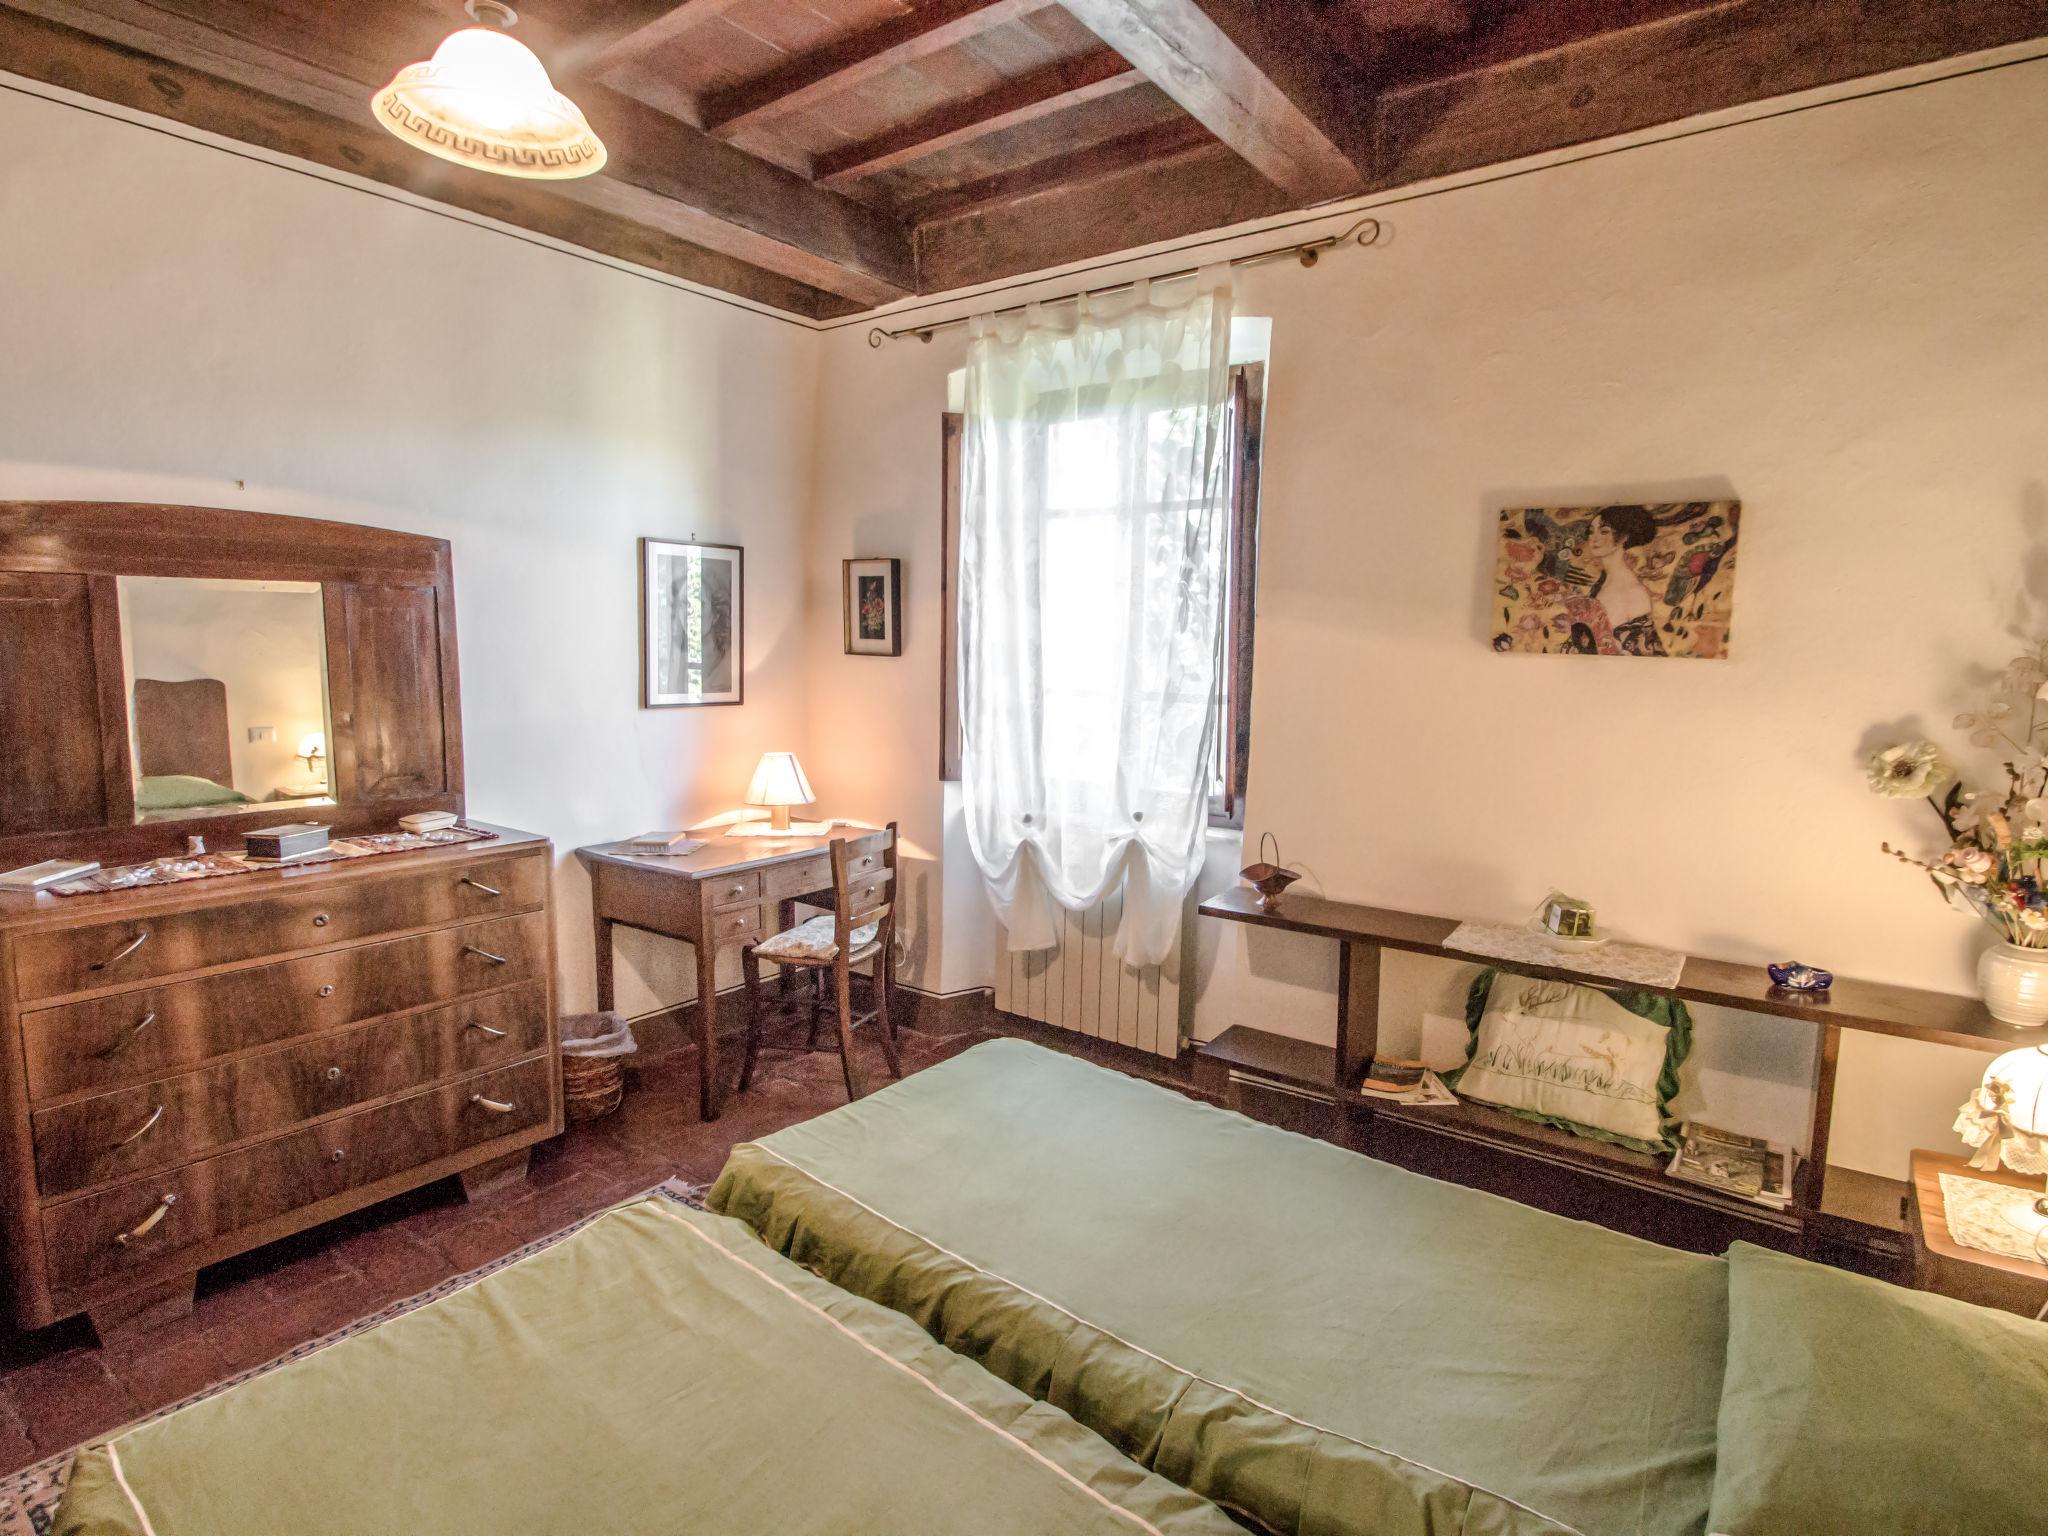 Photo 28 - Maison de 3 chambres à Radda in Chianti avec jardin et terrasse